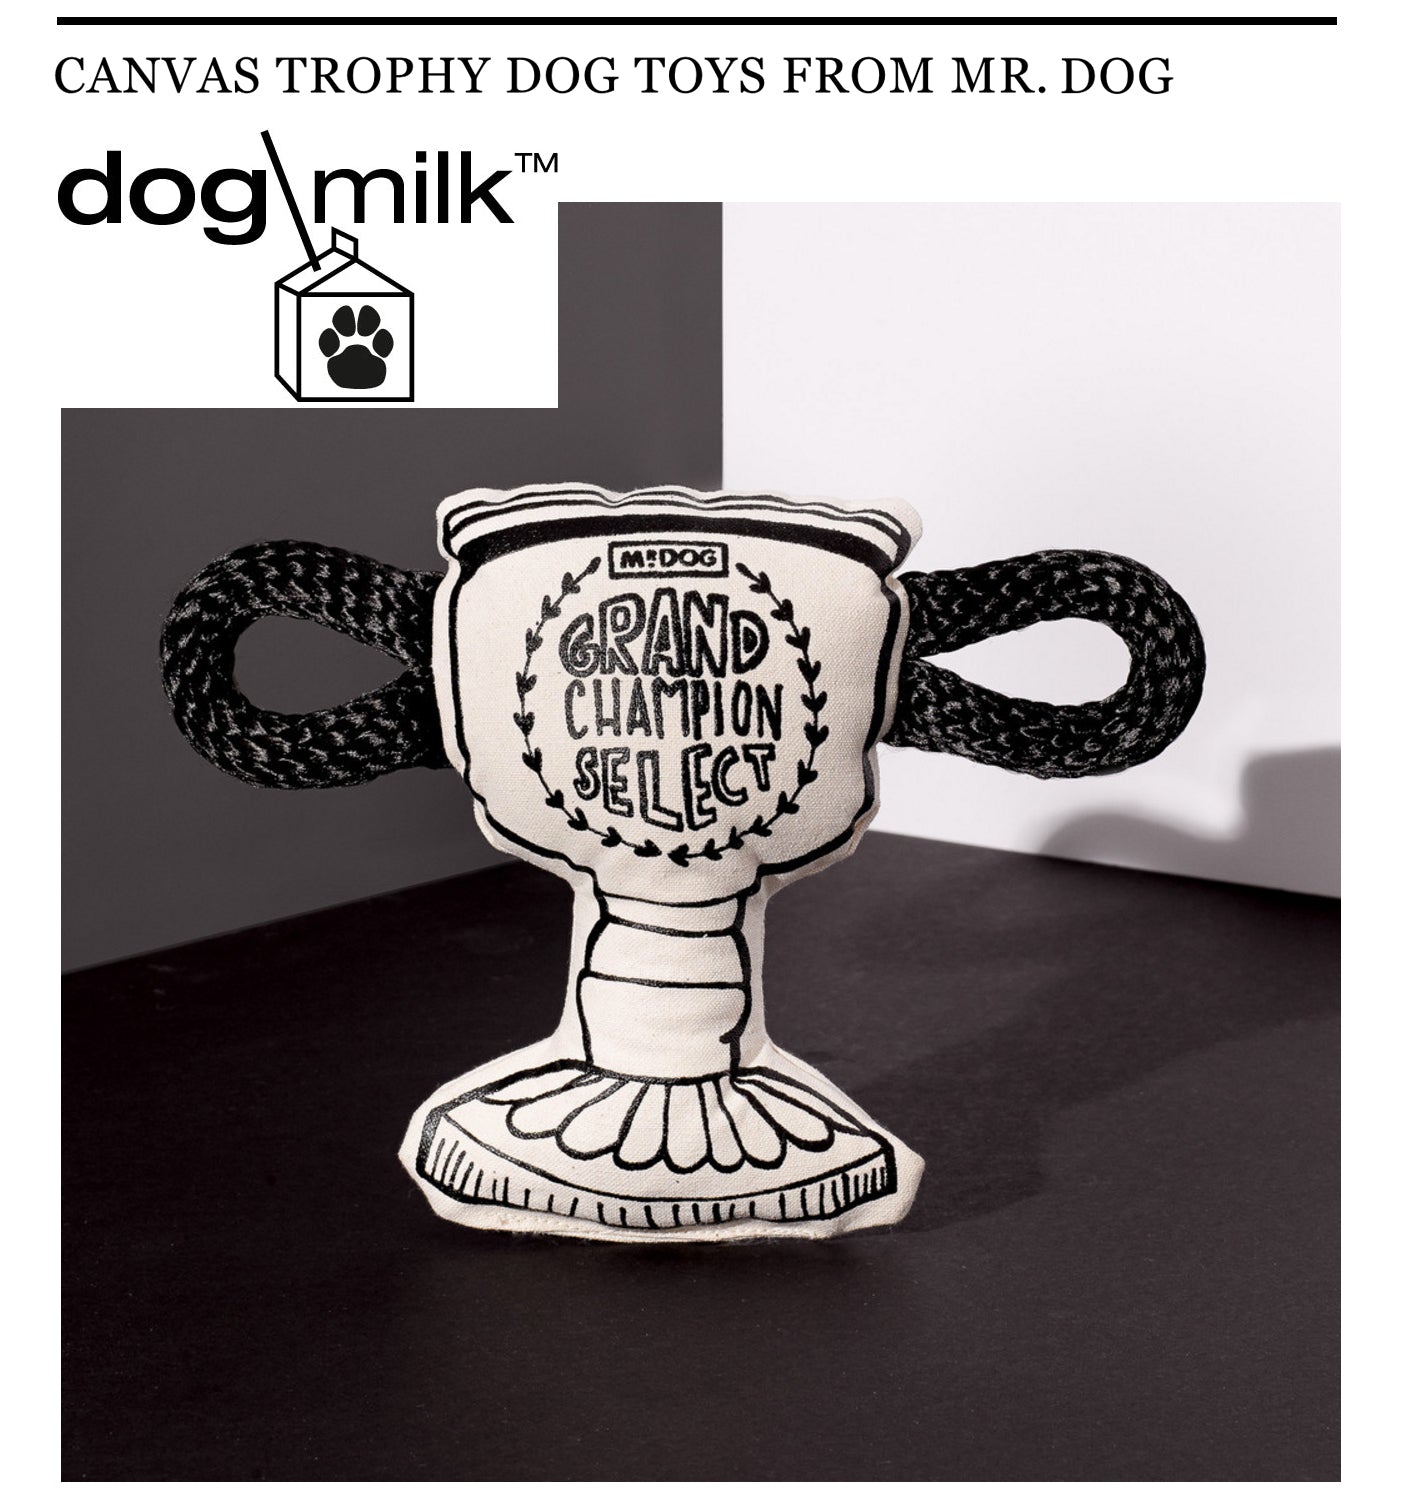 Dog Milk Mr Dog Trophy Toys